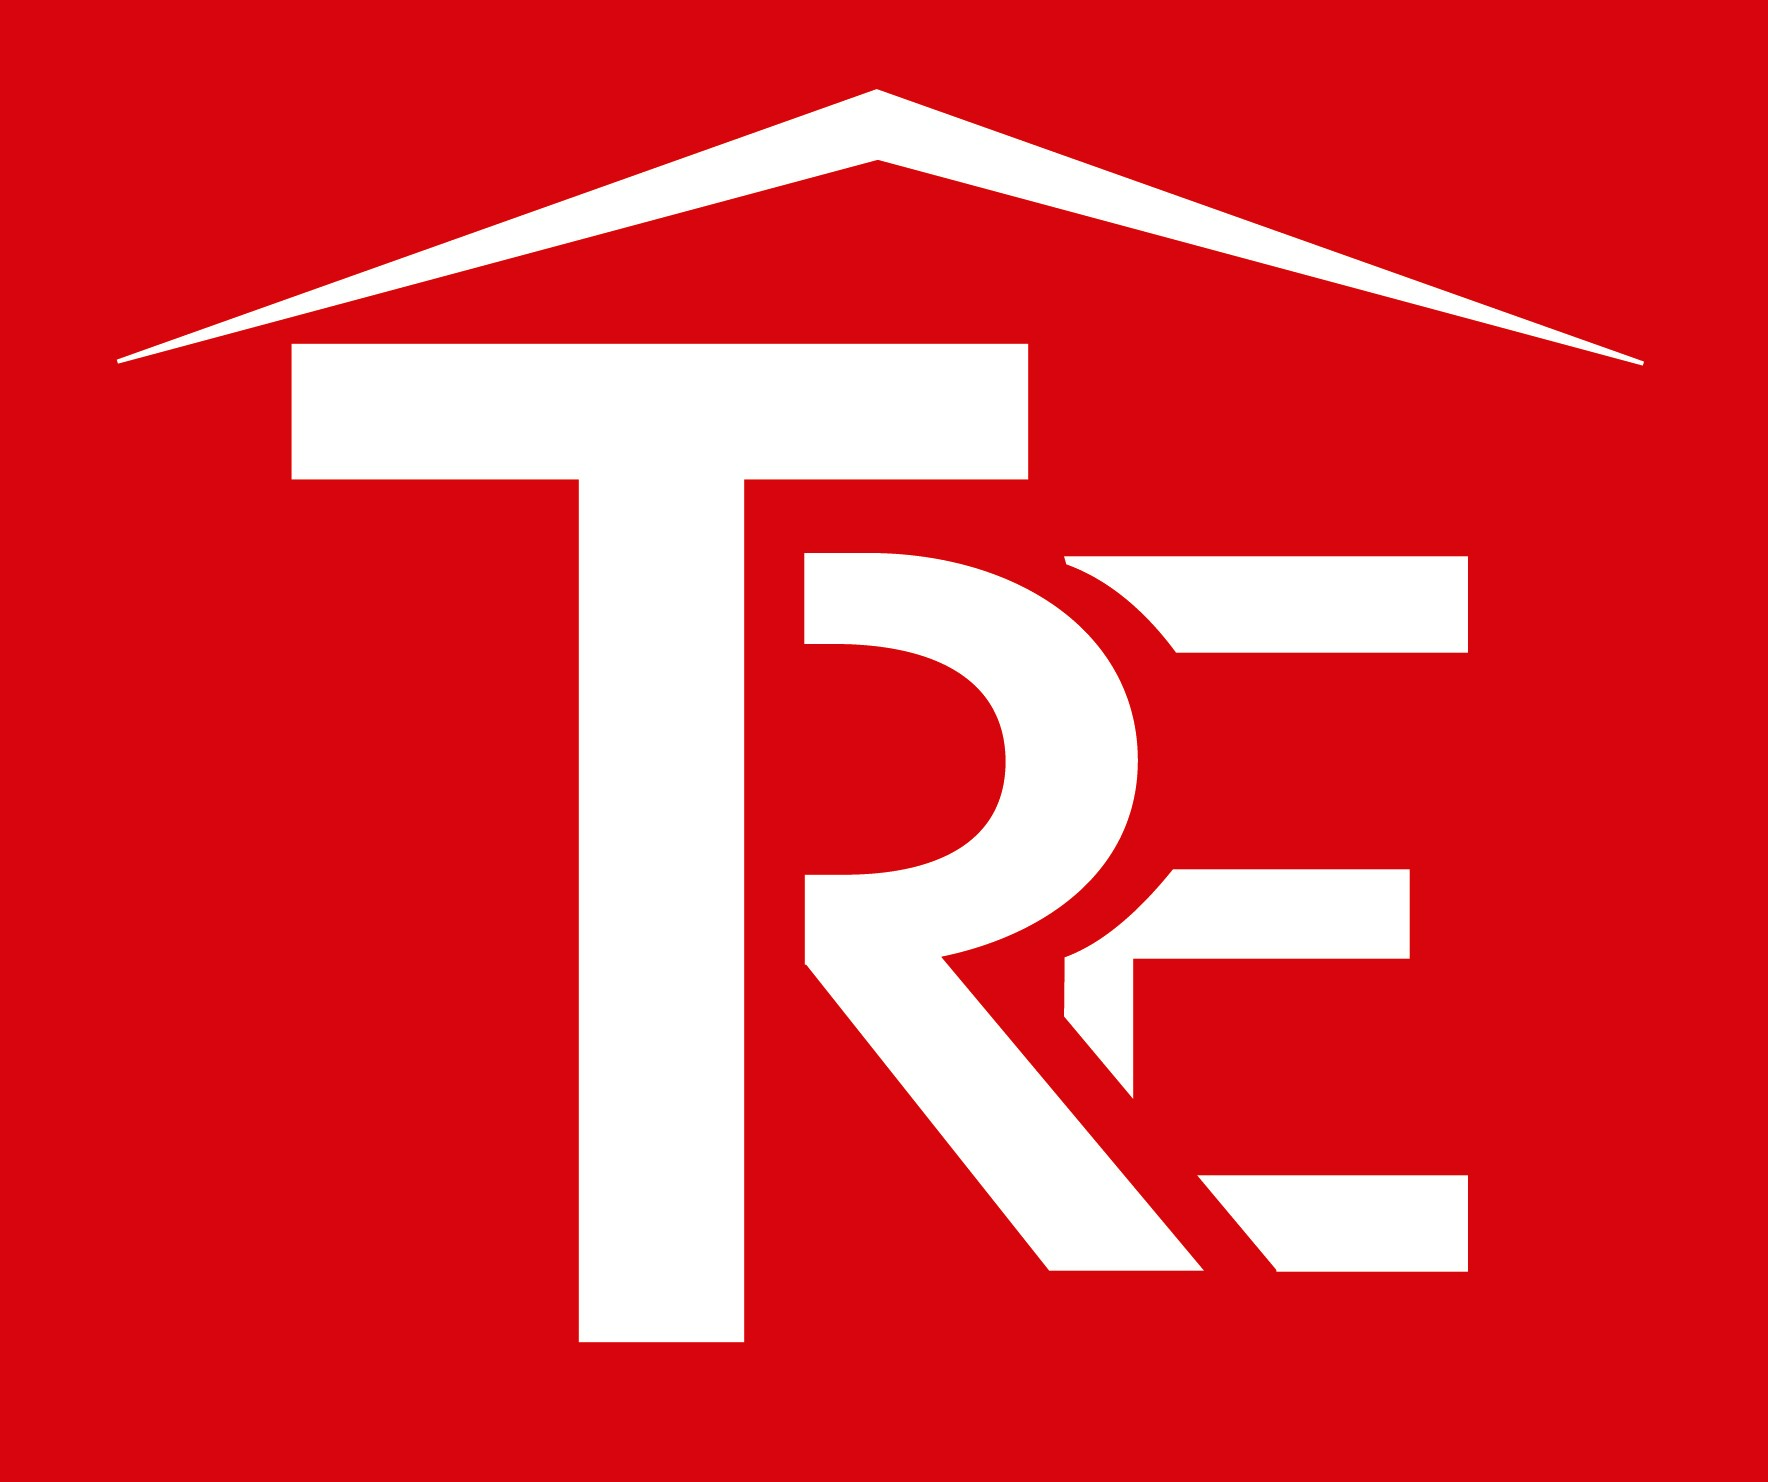 Trueblood Real Estate logo